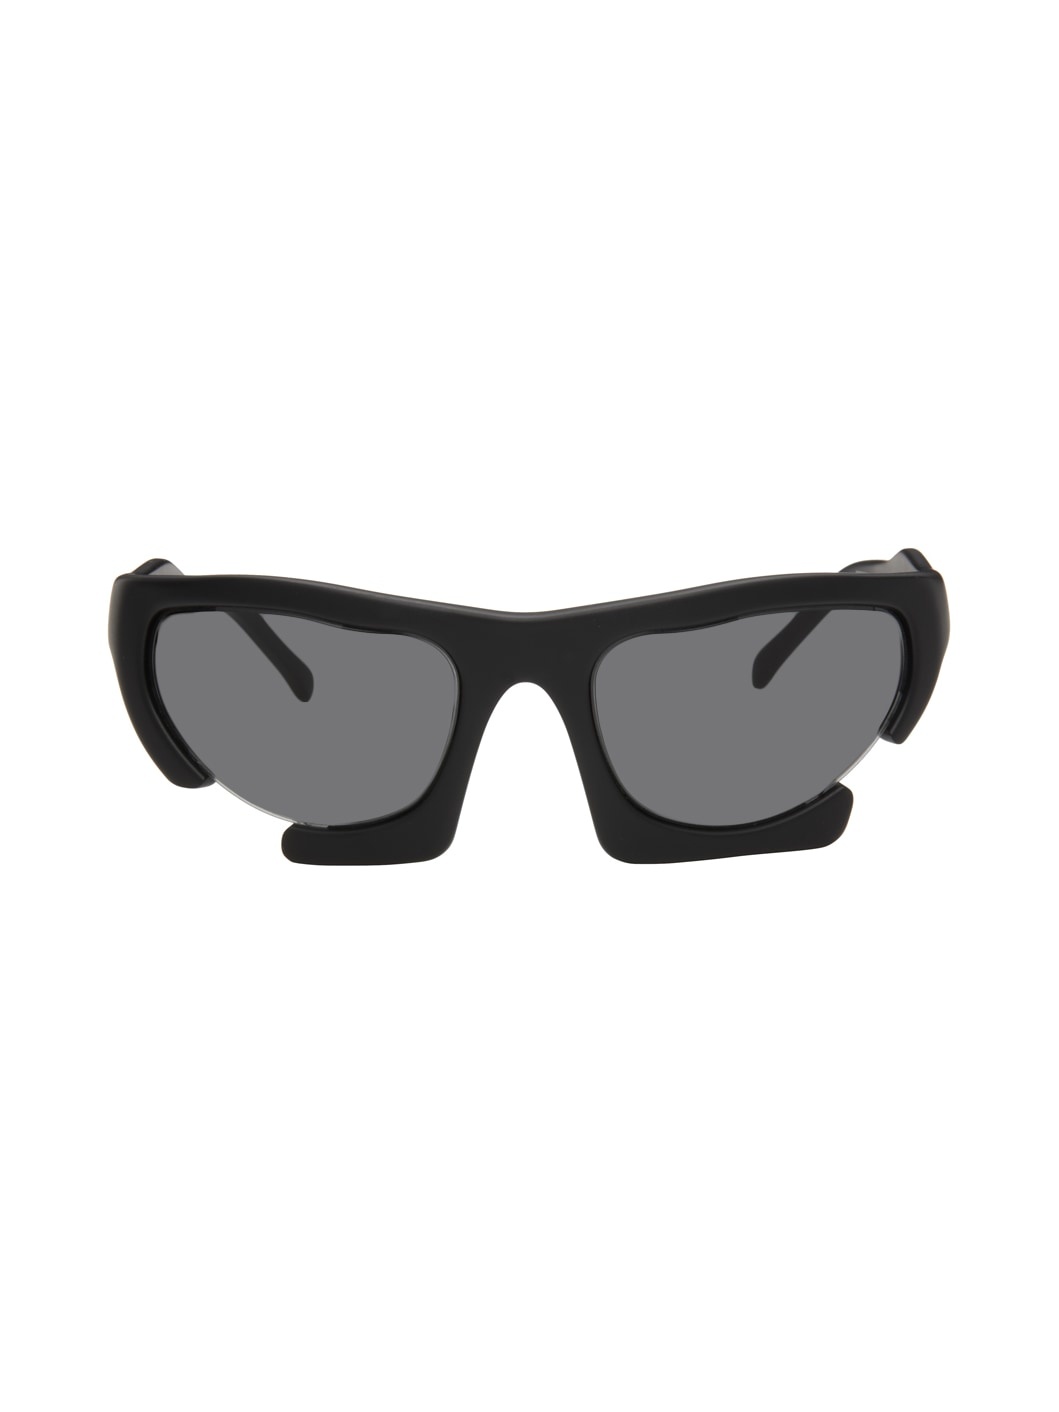 Black Wraparound Sunglasses - 1